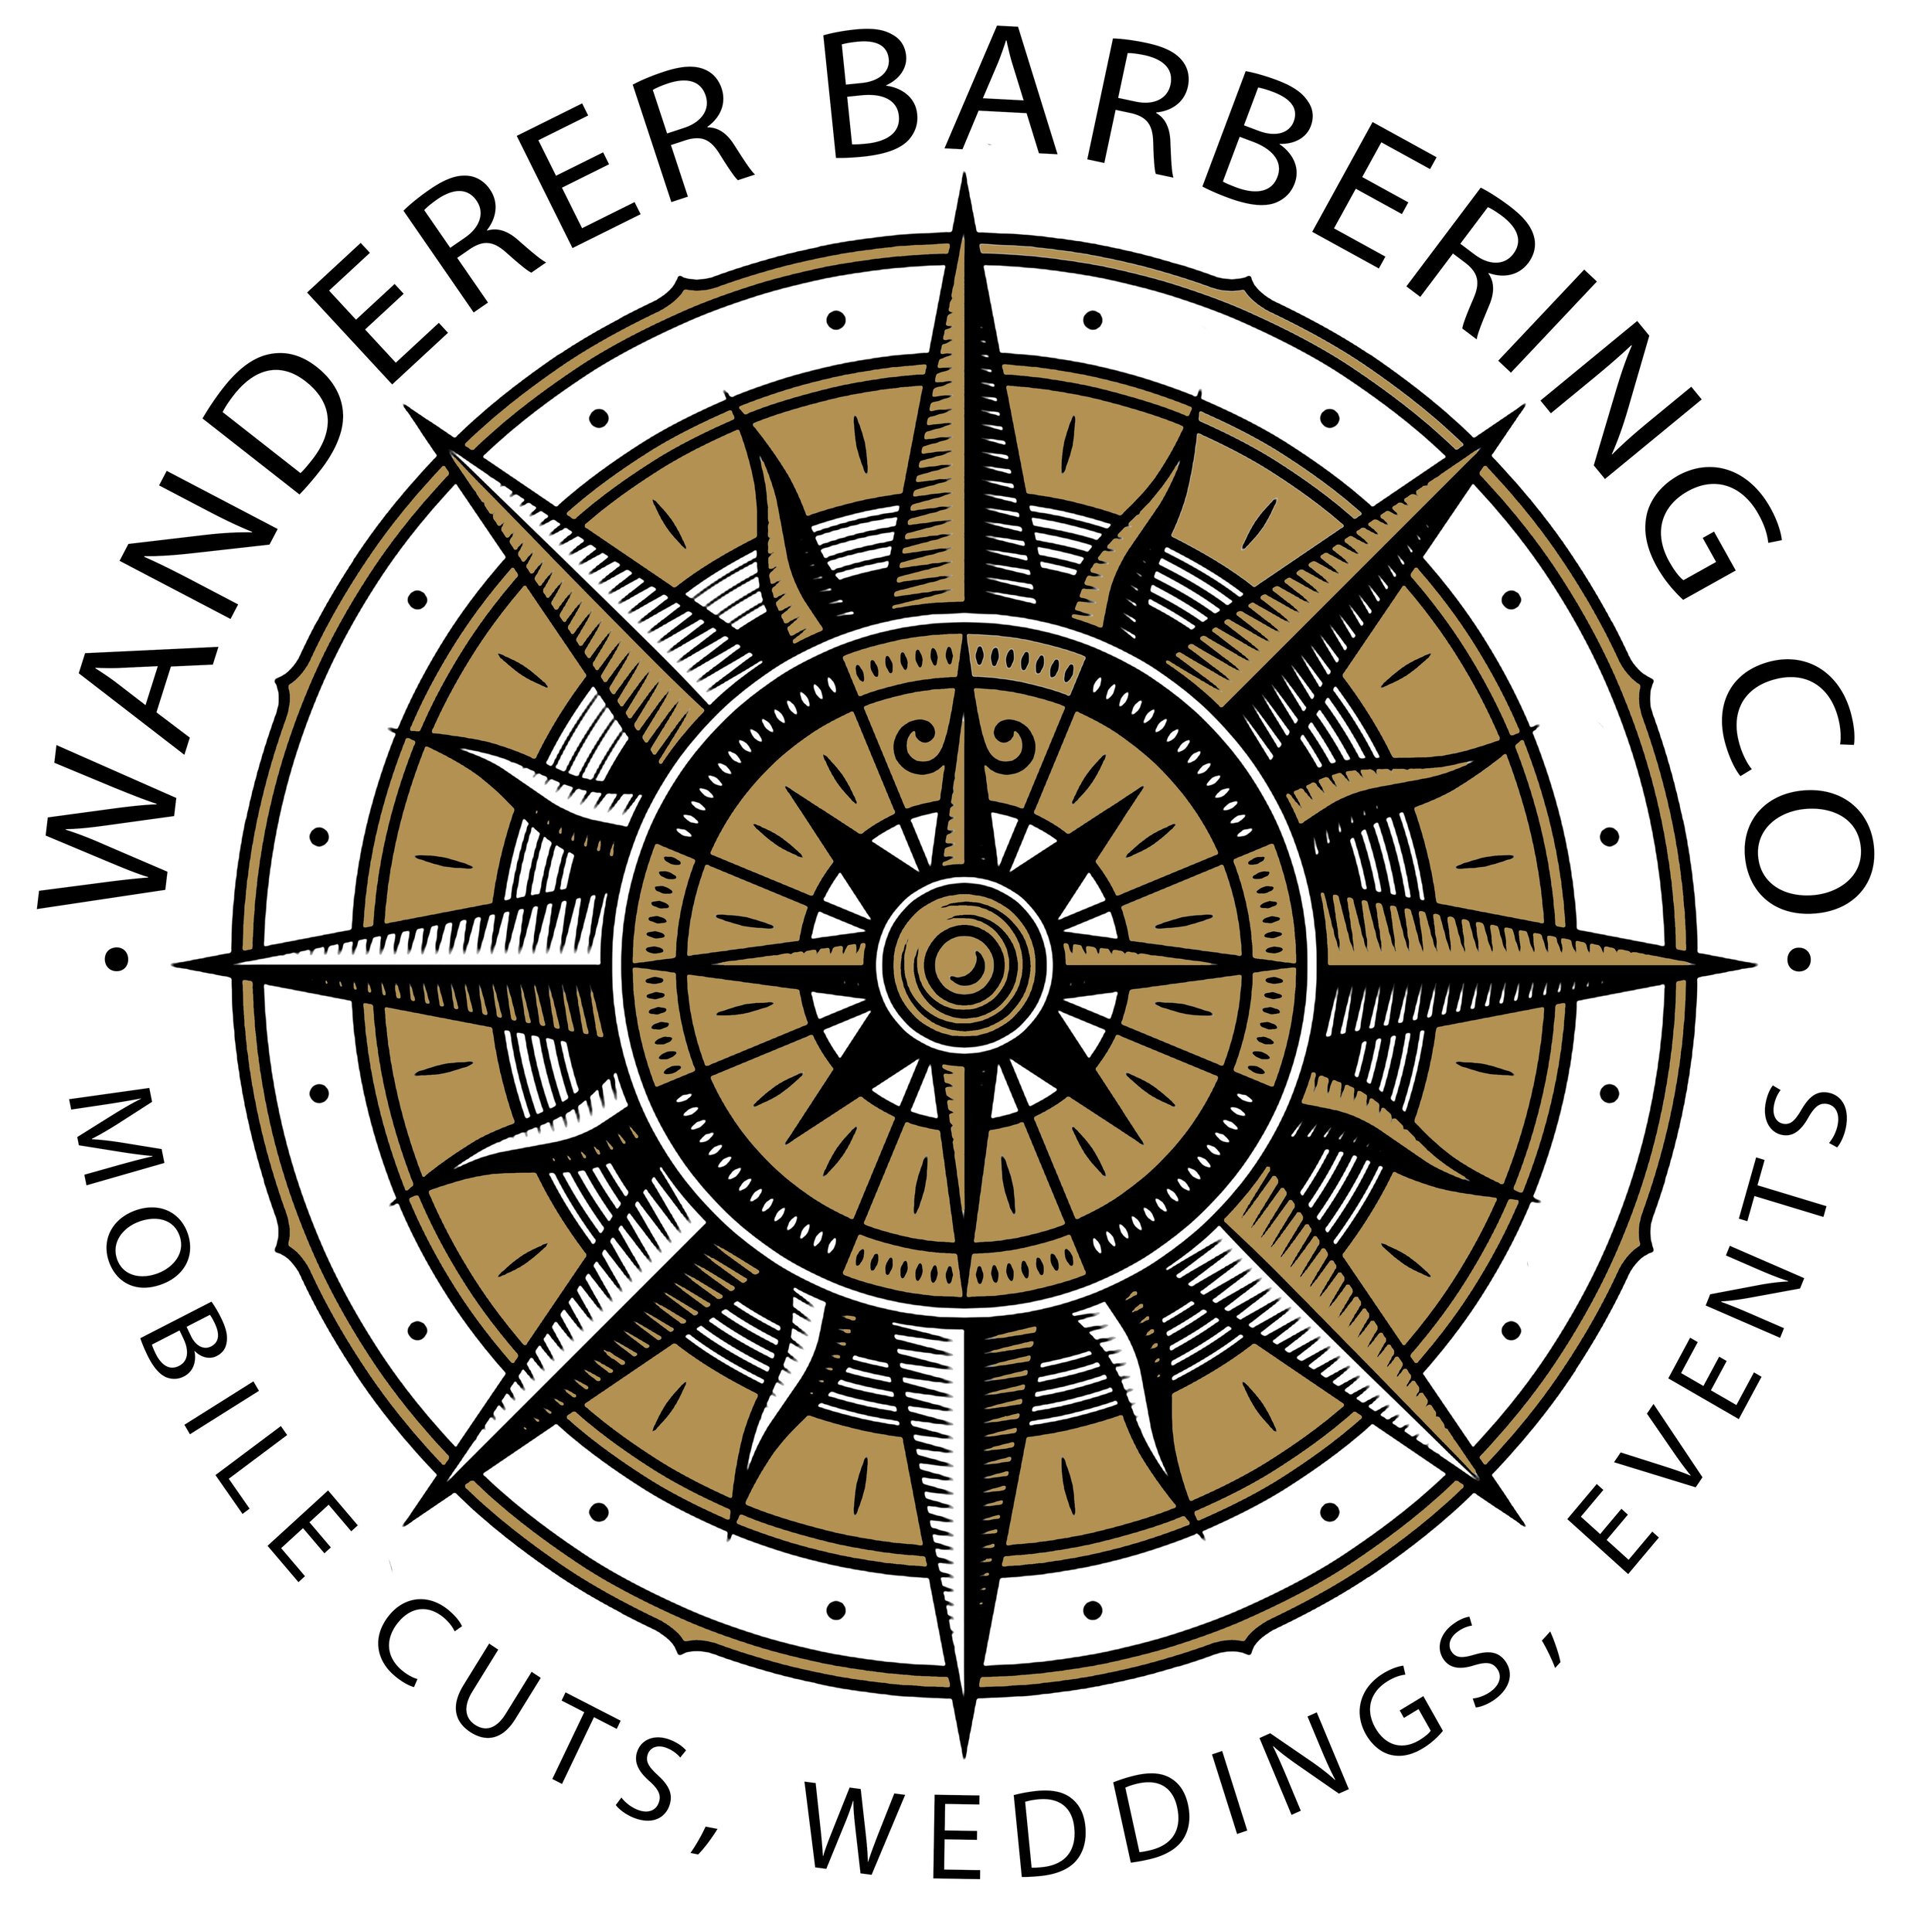 Wanderer Barbering Co.